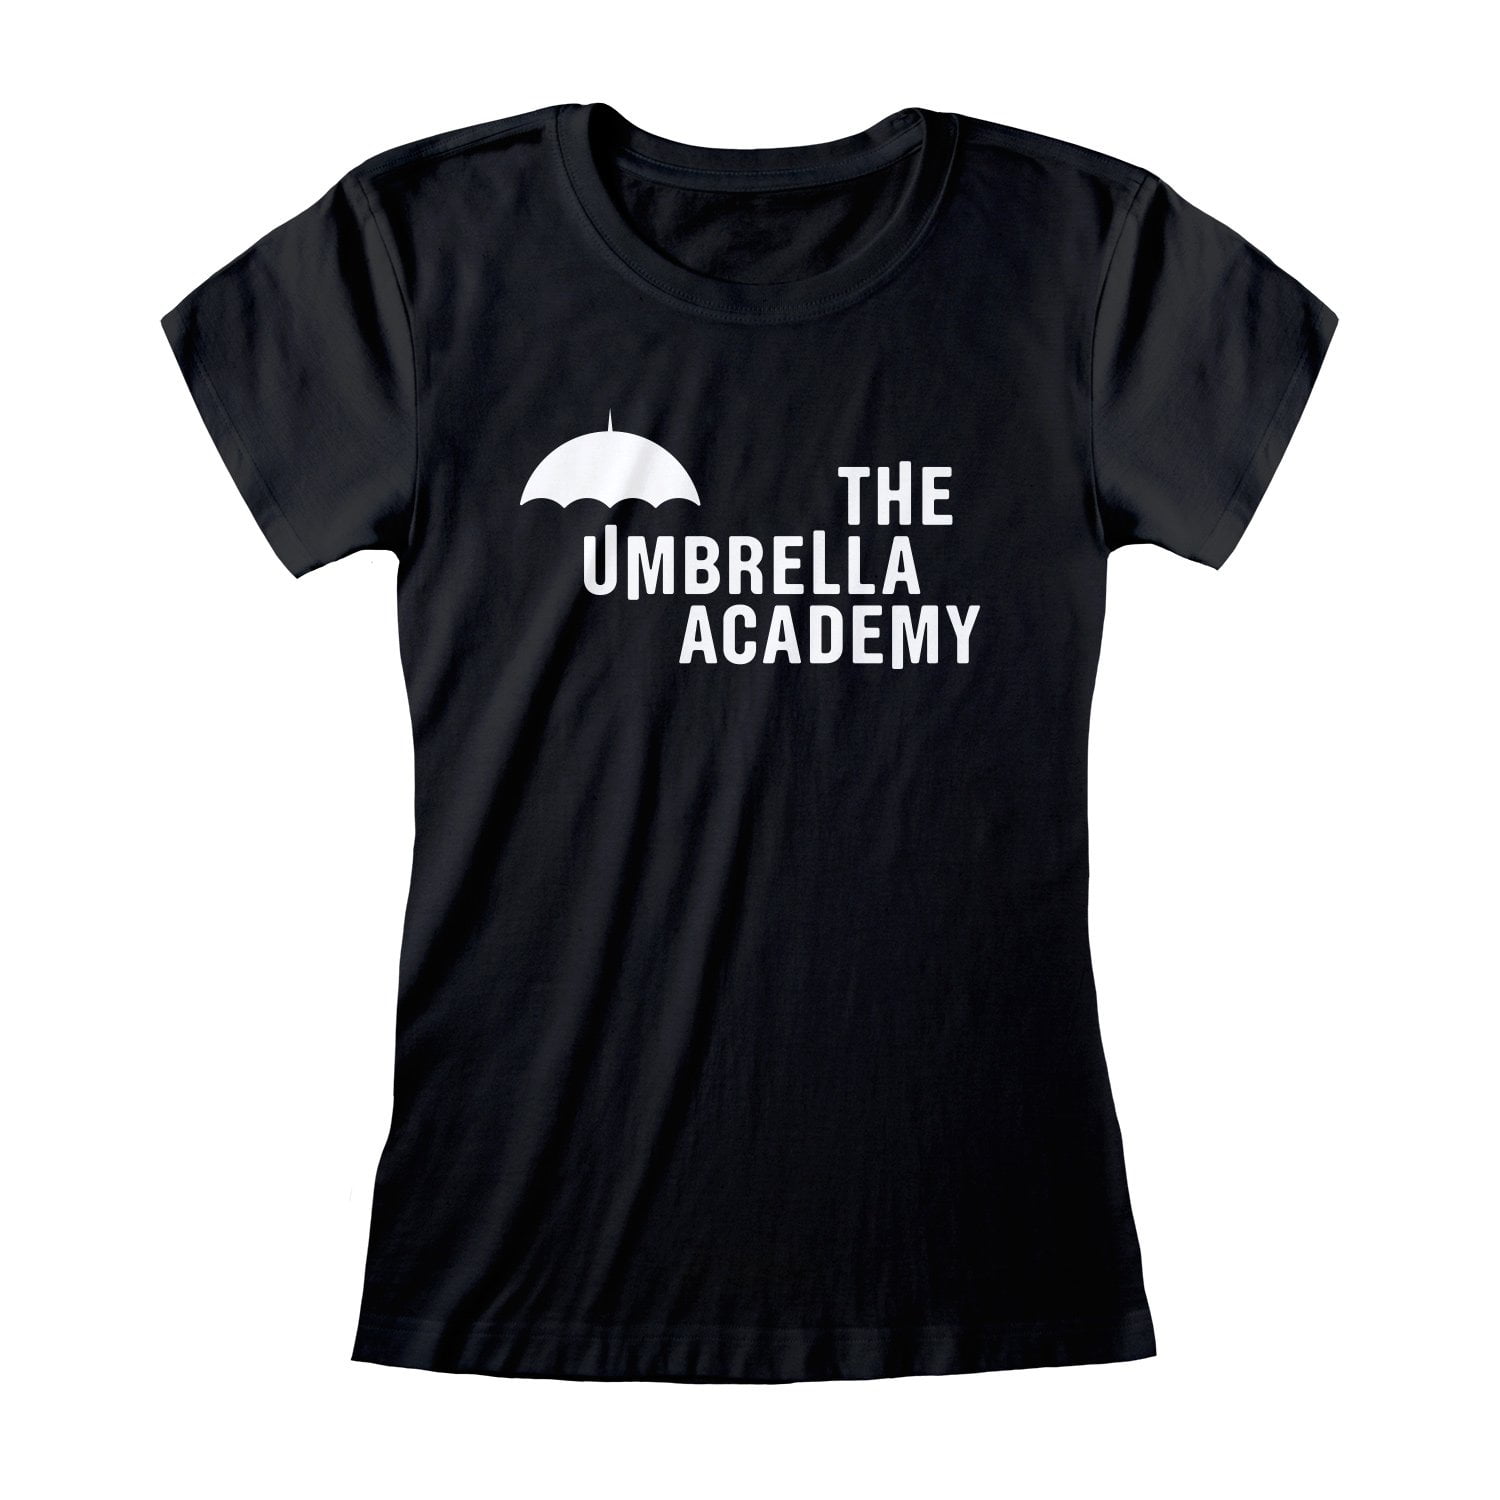 I need umbrella. First Womens Academy logo. Футболка cbum dont be a skinny bitch. AA Academy Merch.